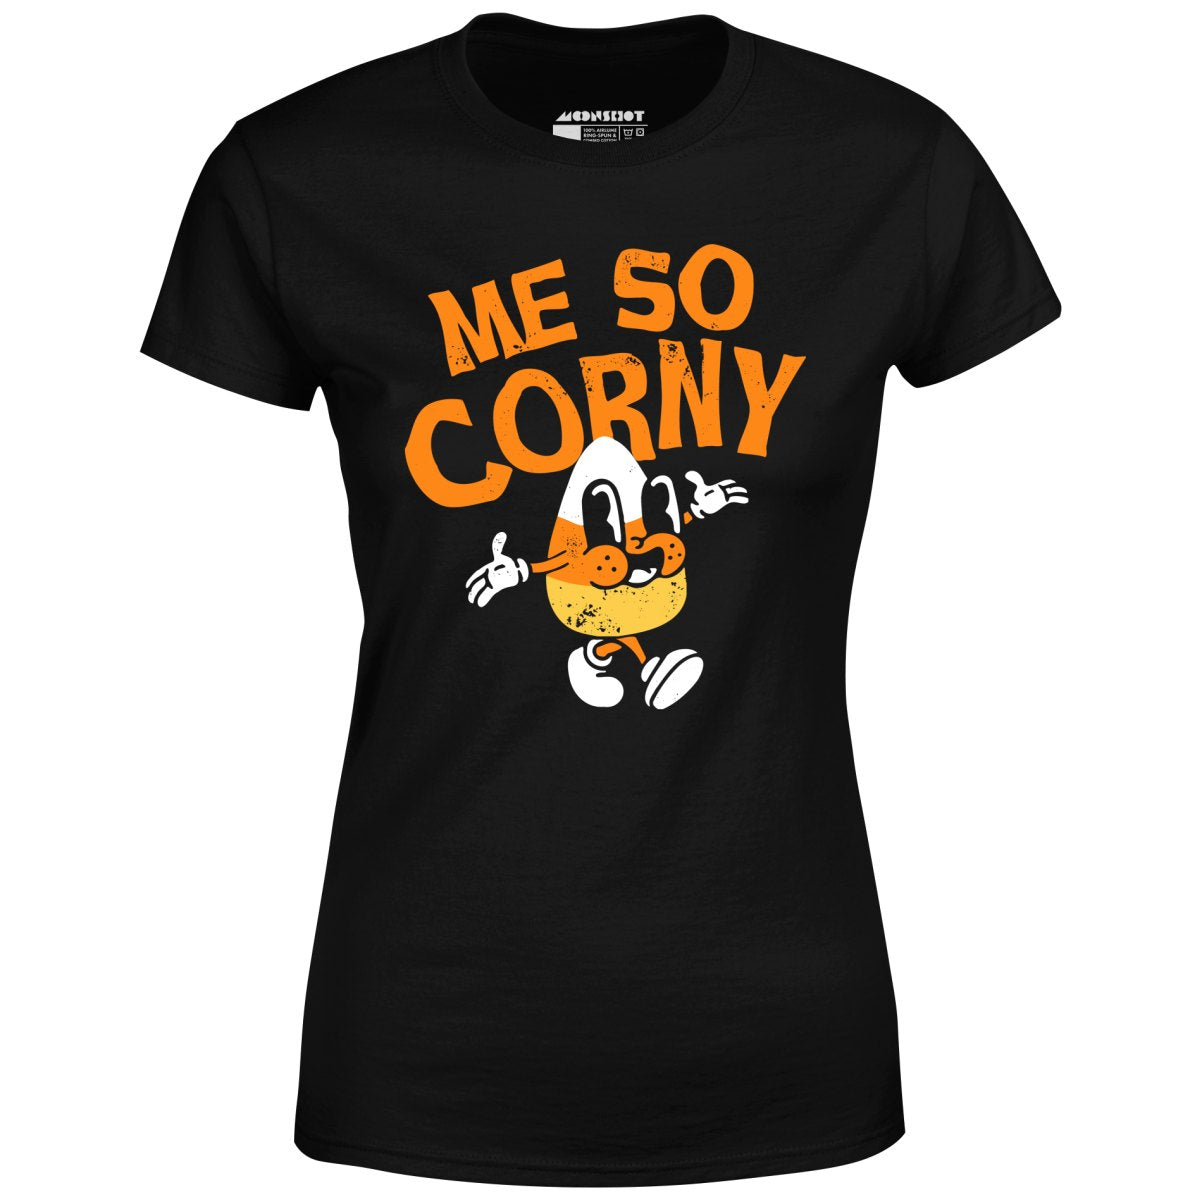 Me So Corny v2 - Women's T-Shirt